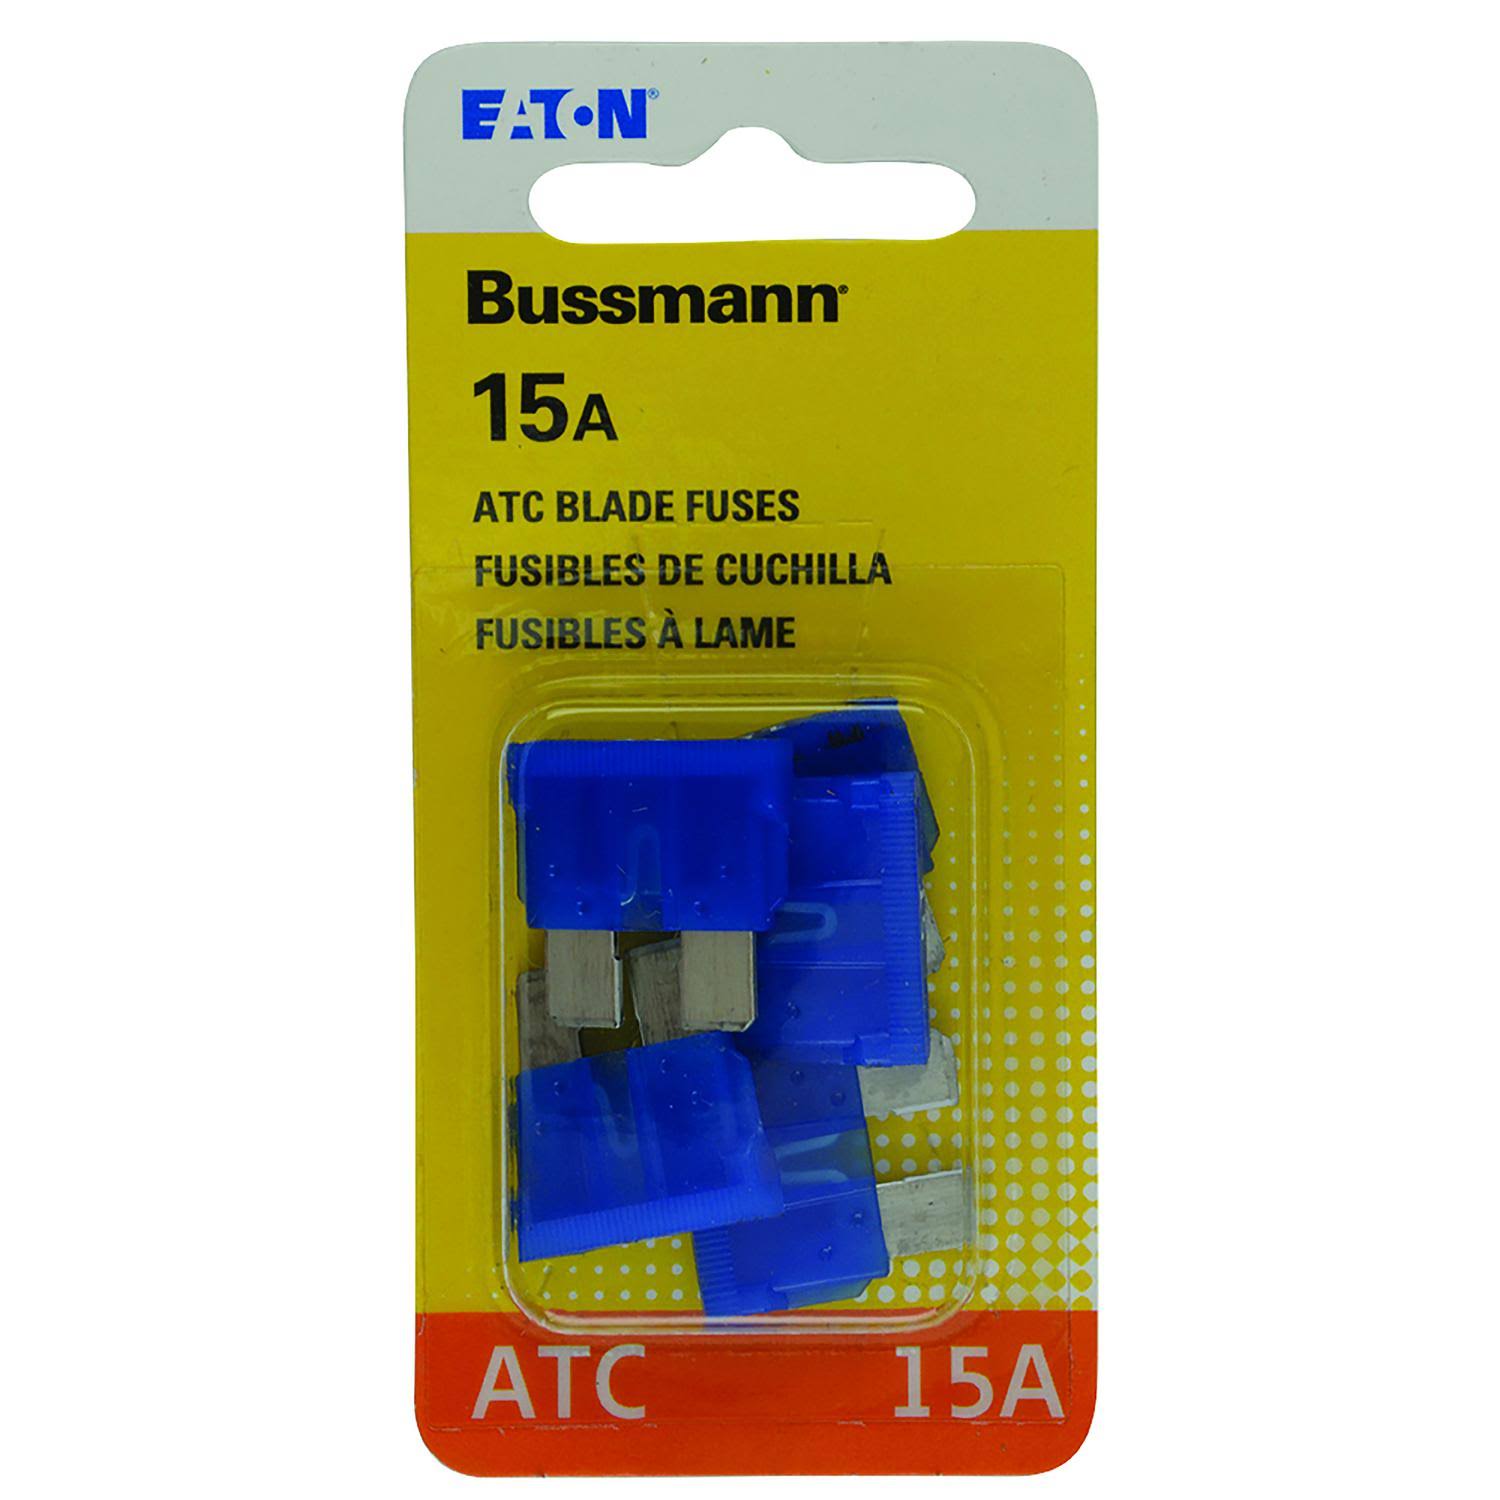 Bussmann Atc Blade Fuse - 15 Amp